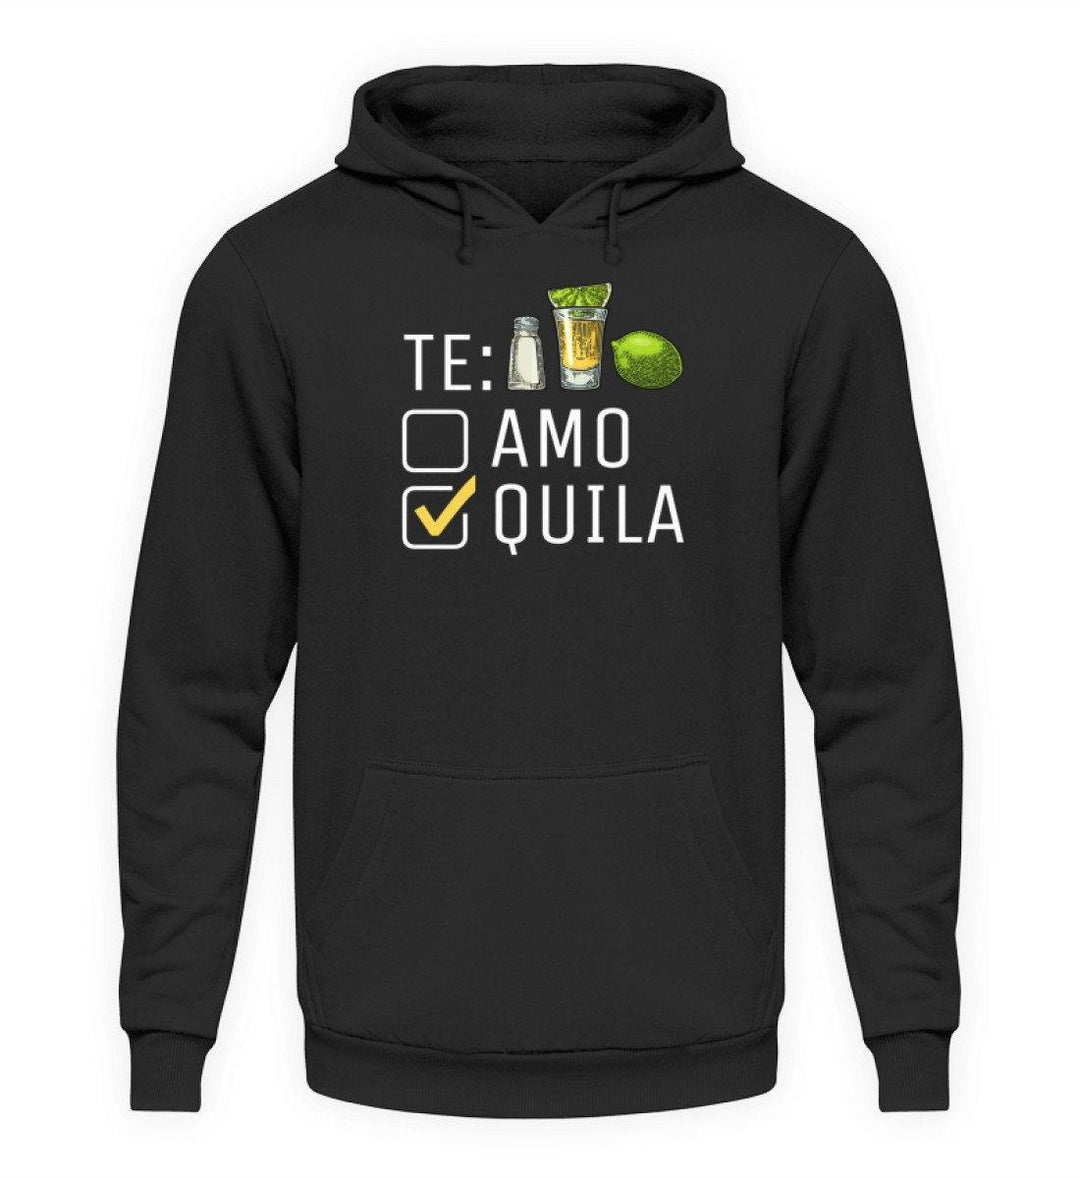 Tequila Te:amo Te:qulia   - Unisex Kapuzenpullover Hoodie - Words on Shirts